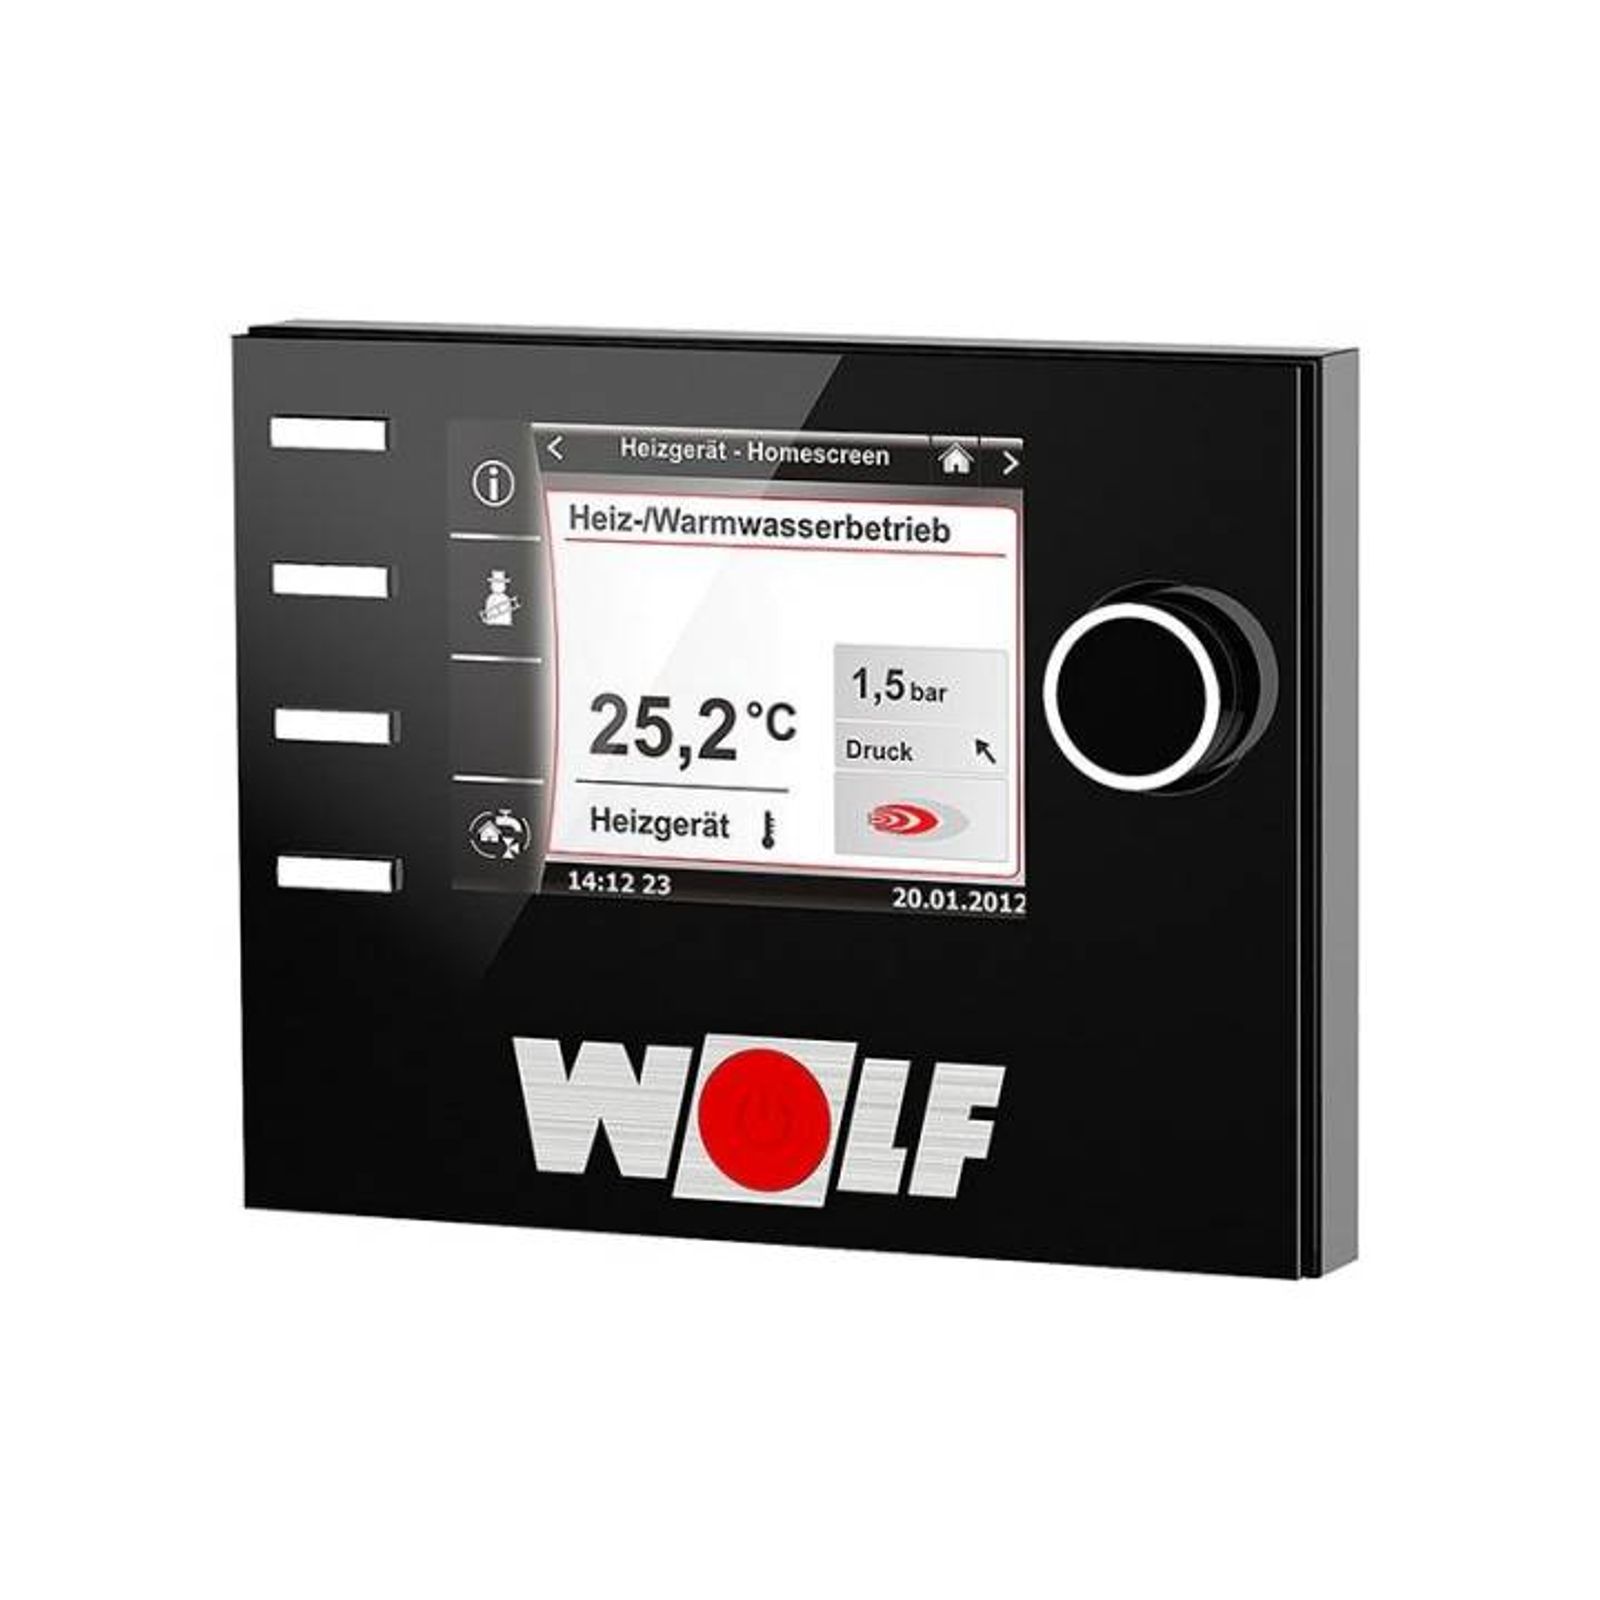 Wolf Gas-Brennwert 24 kW Kompaktheizzentrale CGS-2R-24